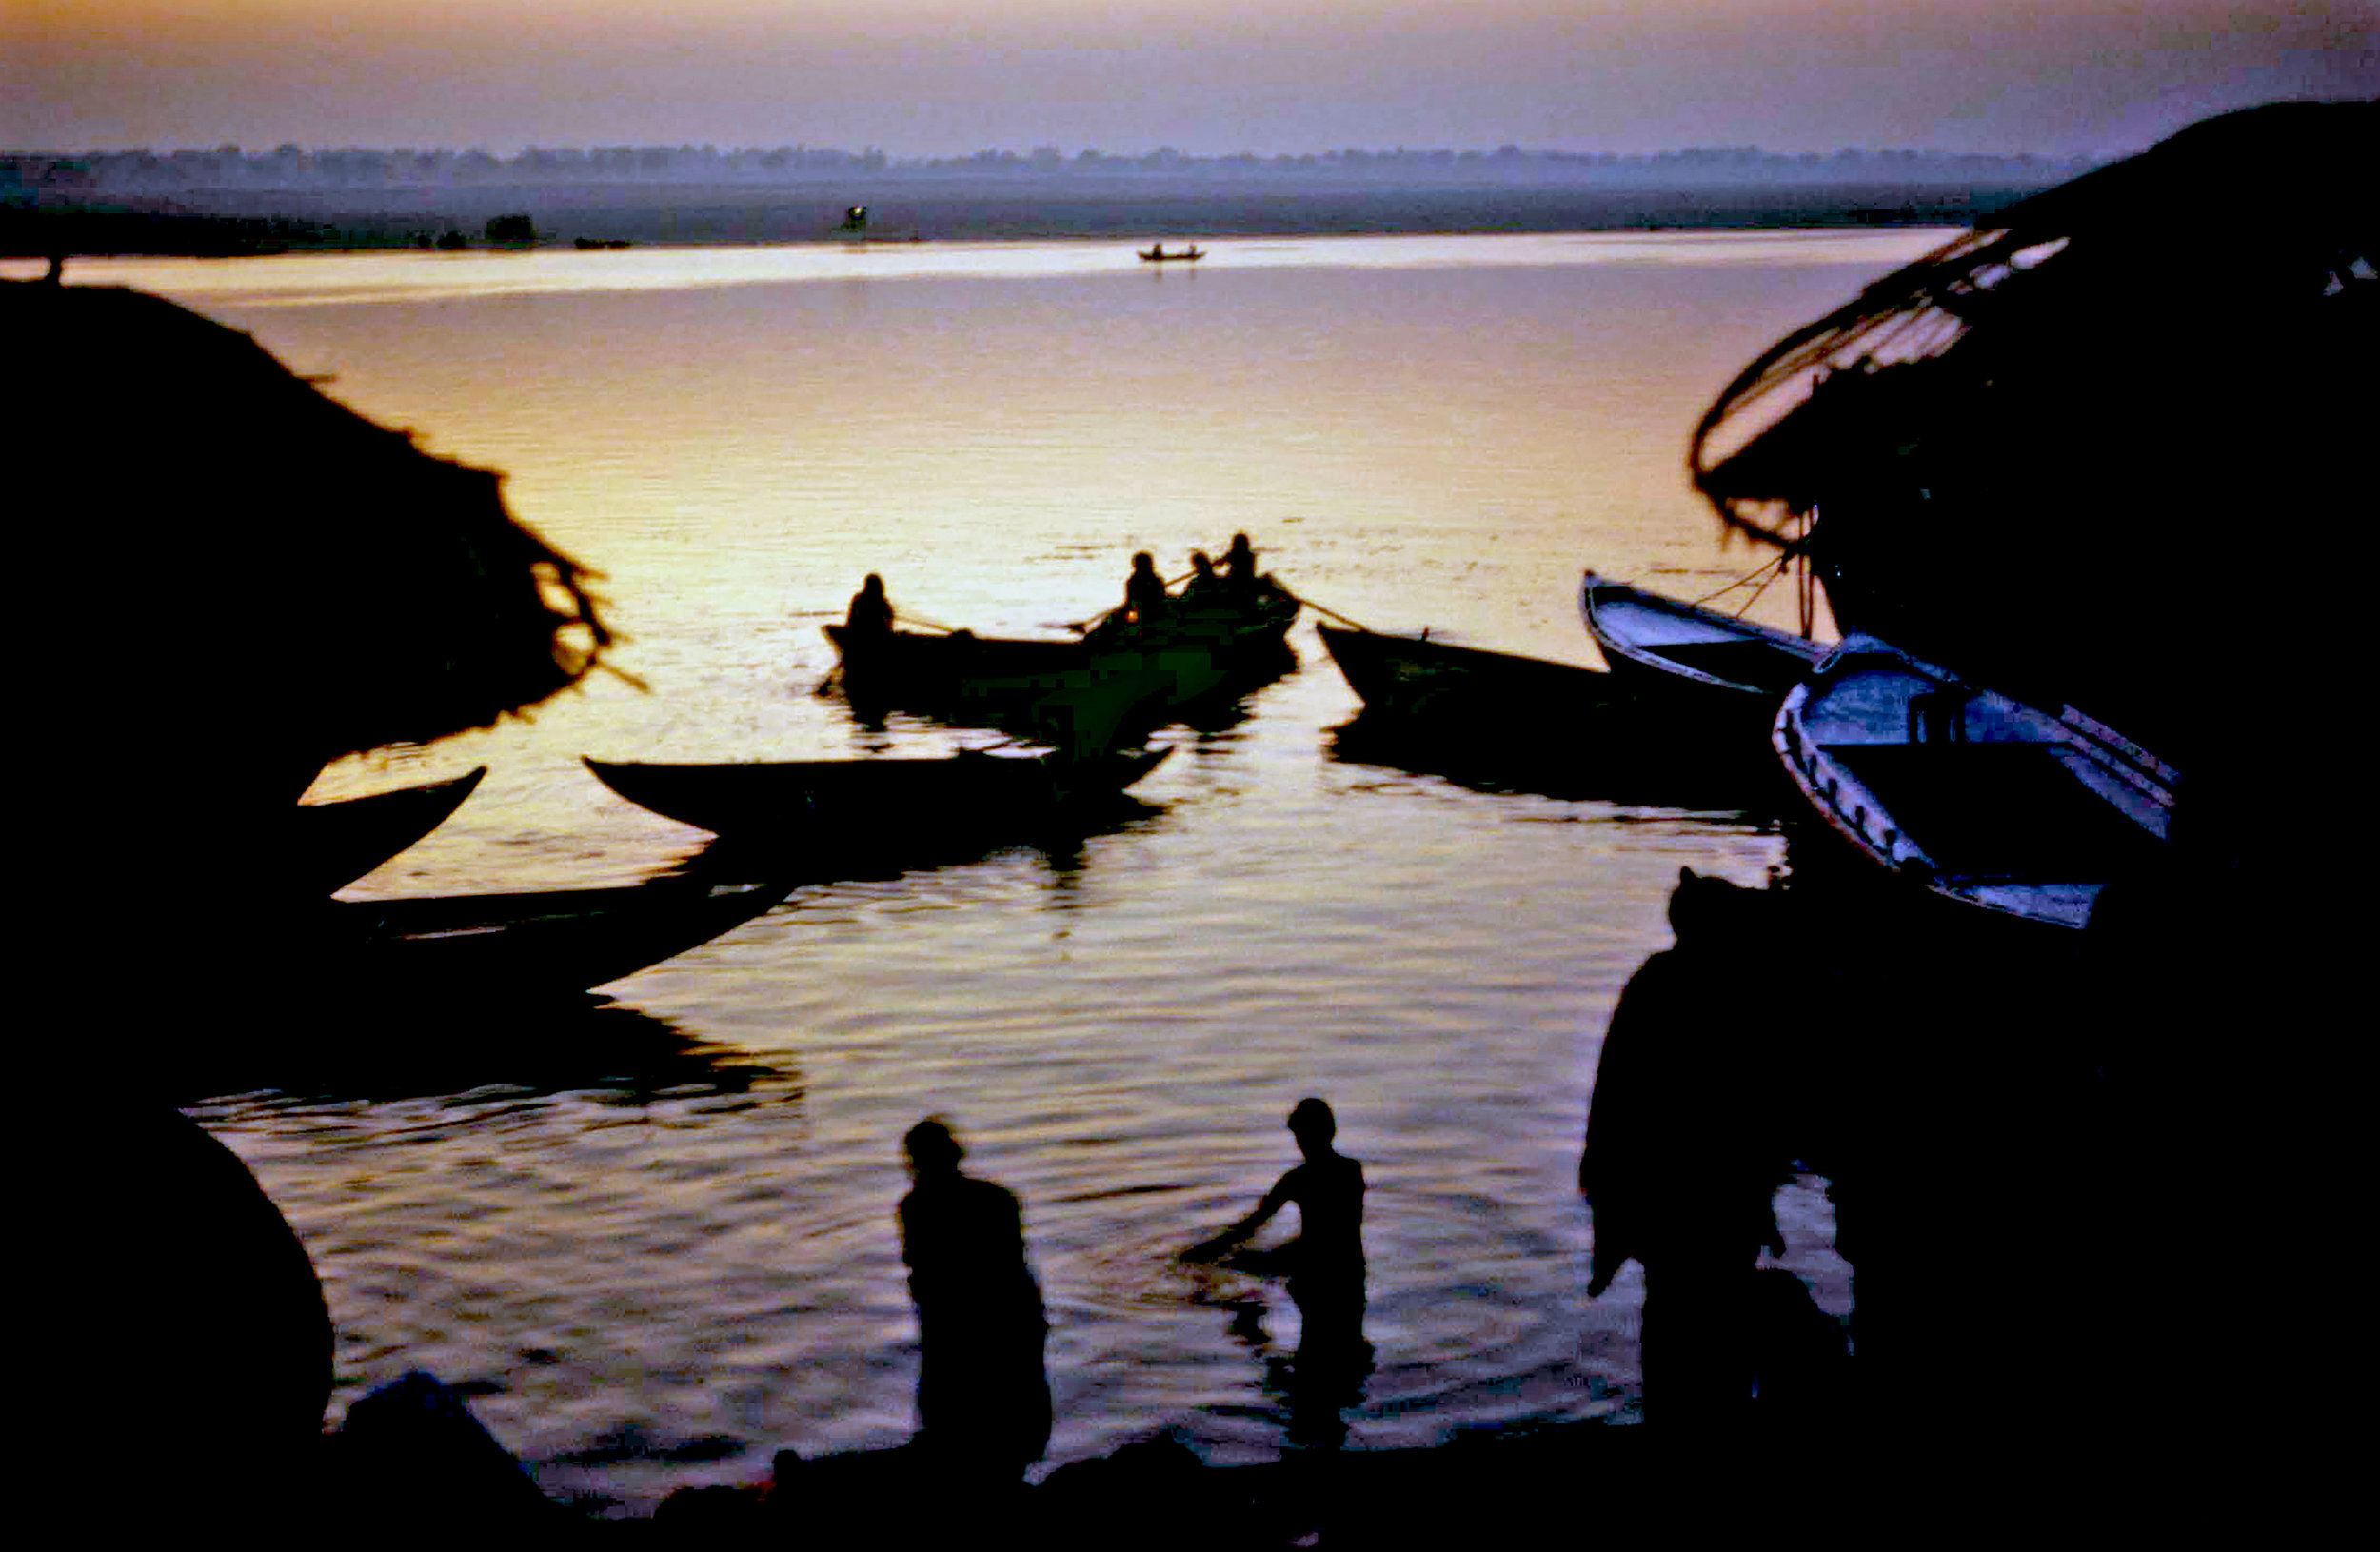 Ganges Sunset / Varanasi, India